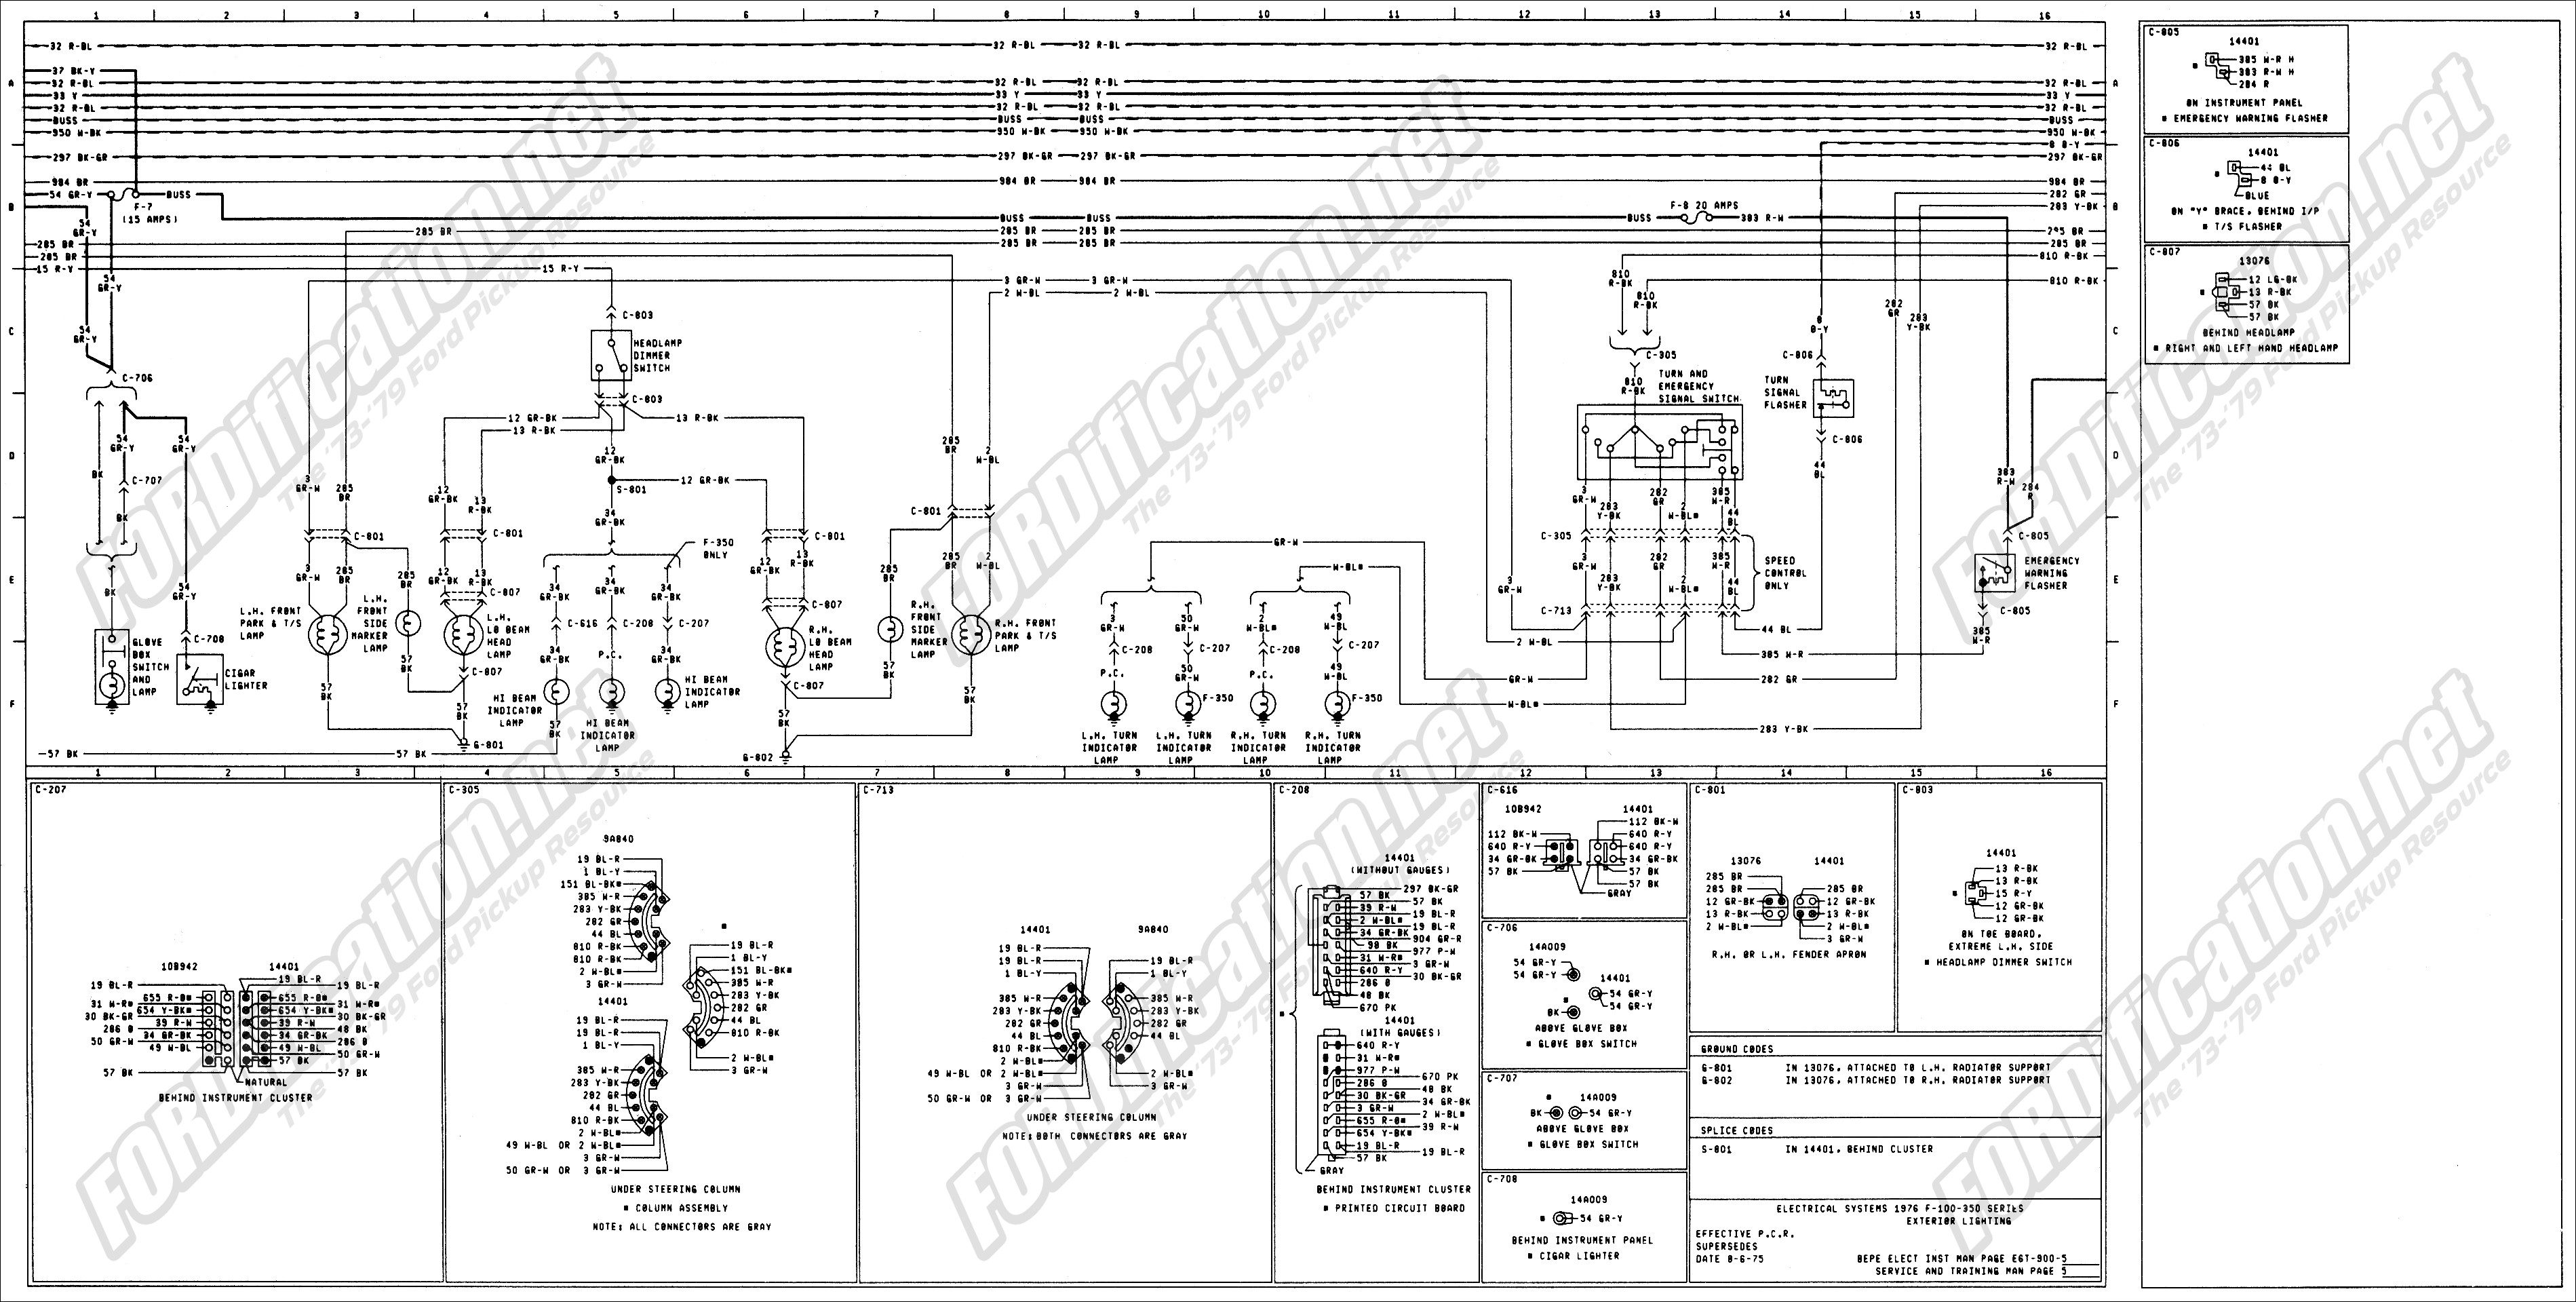 Truck Trailer Wiring Diagram 77 ford F250 Wiring Diagram Wiring Info • Of Truck Trailer Wiring Diagram